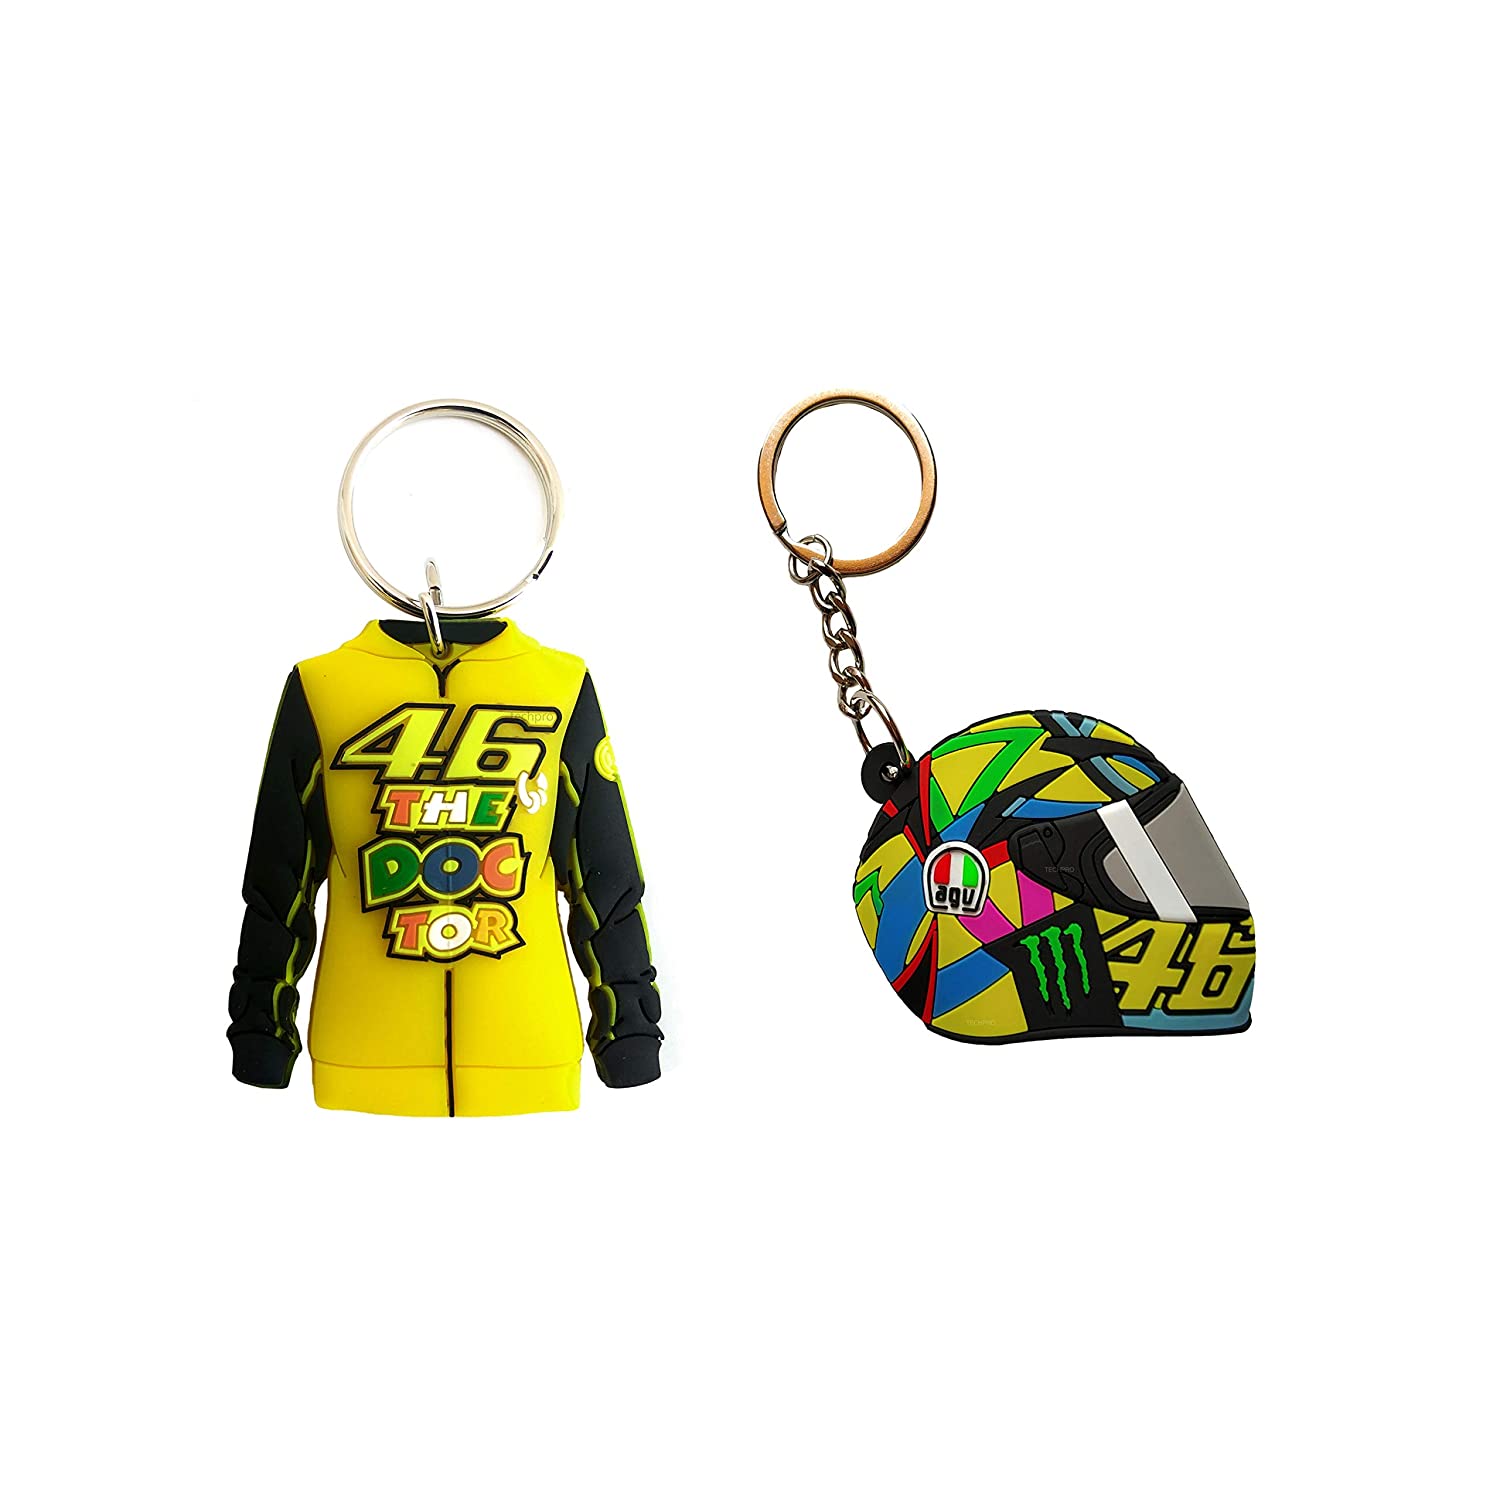 AVI Multi-Colour Double-Sided for Rossi Jacket Keychain & Double-Sided DR 46 for Rossi AGU Helmet Keychain Combo Pack (2 pcs) R1402437-Stumbit Bikes and Cars